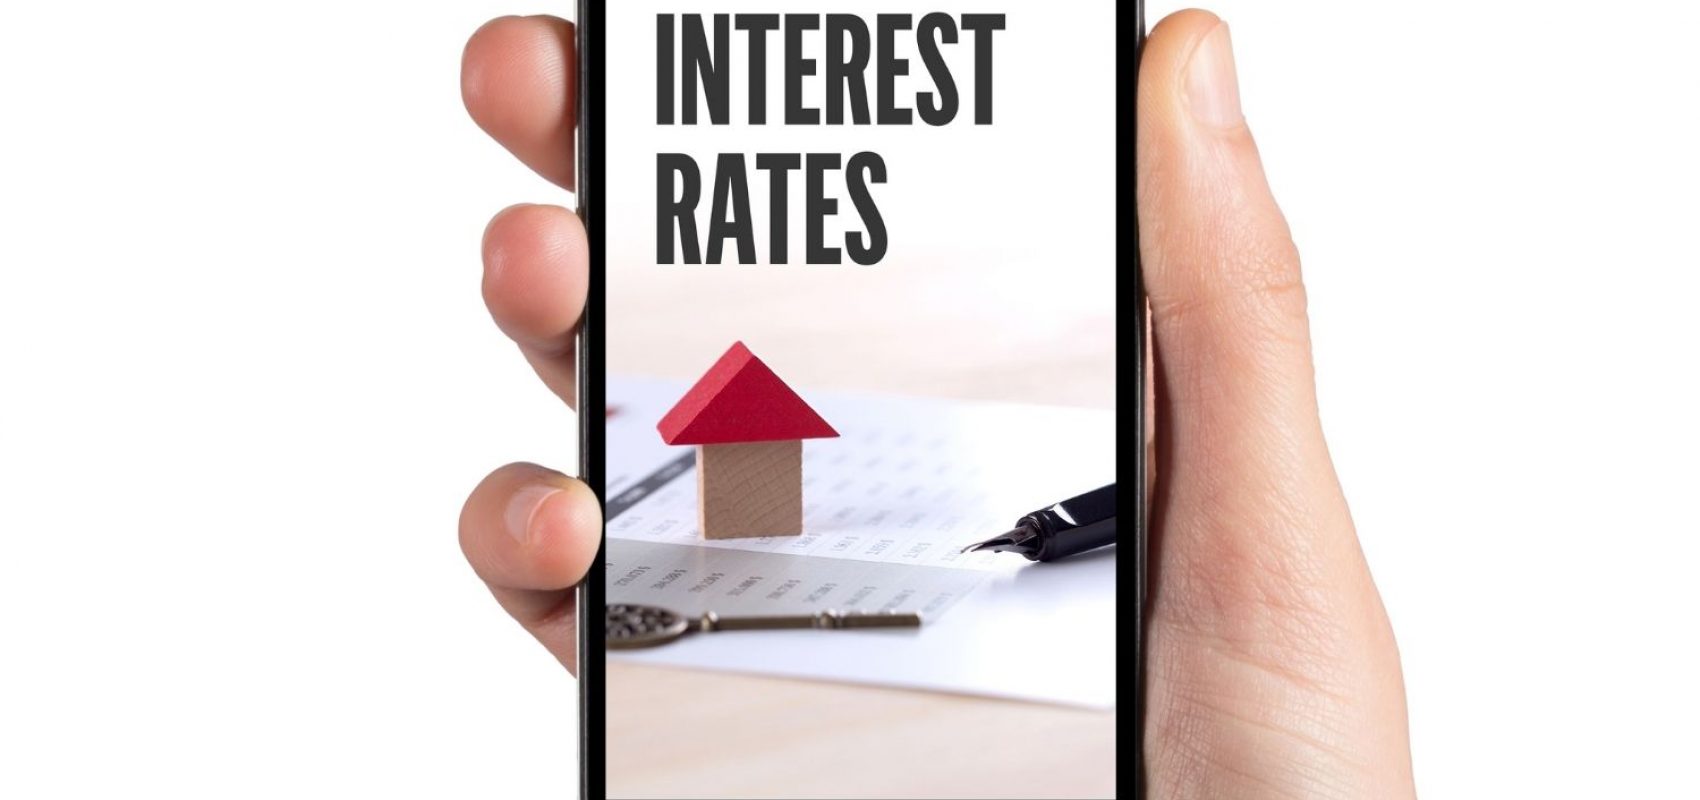 Interest rates - IG image (1500 × 1500 px)